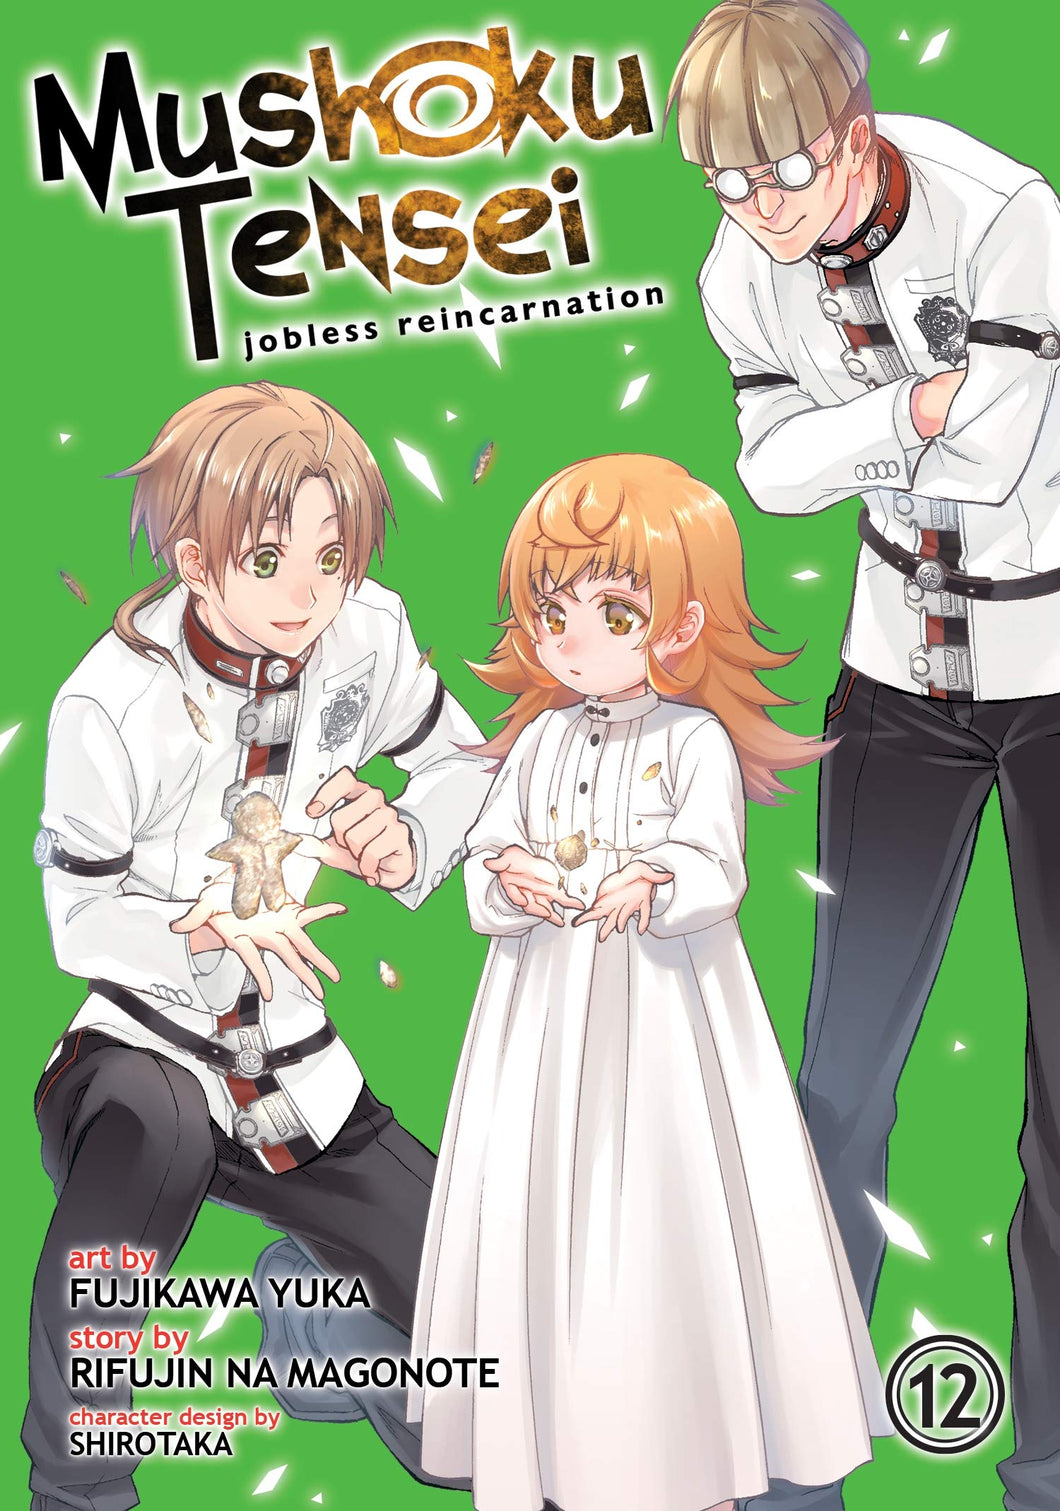 Mushoku Tensei Jobless Reincarnation Volume 12